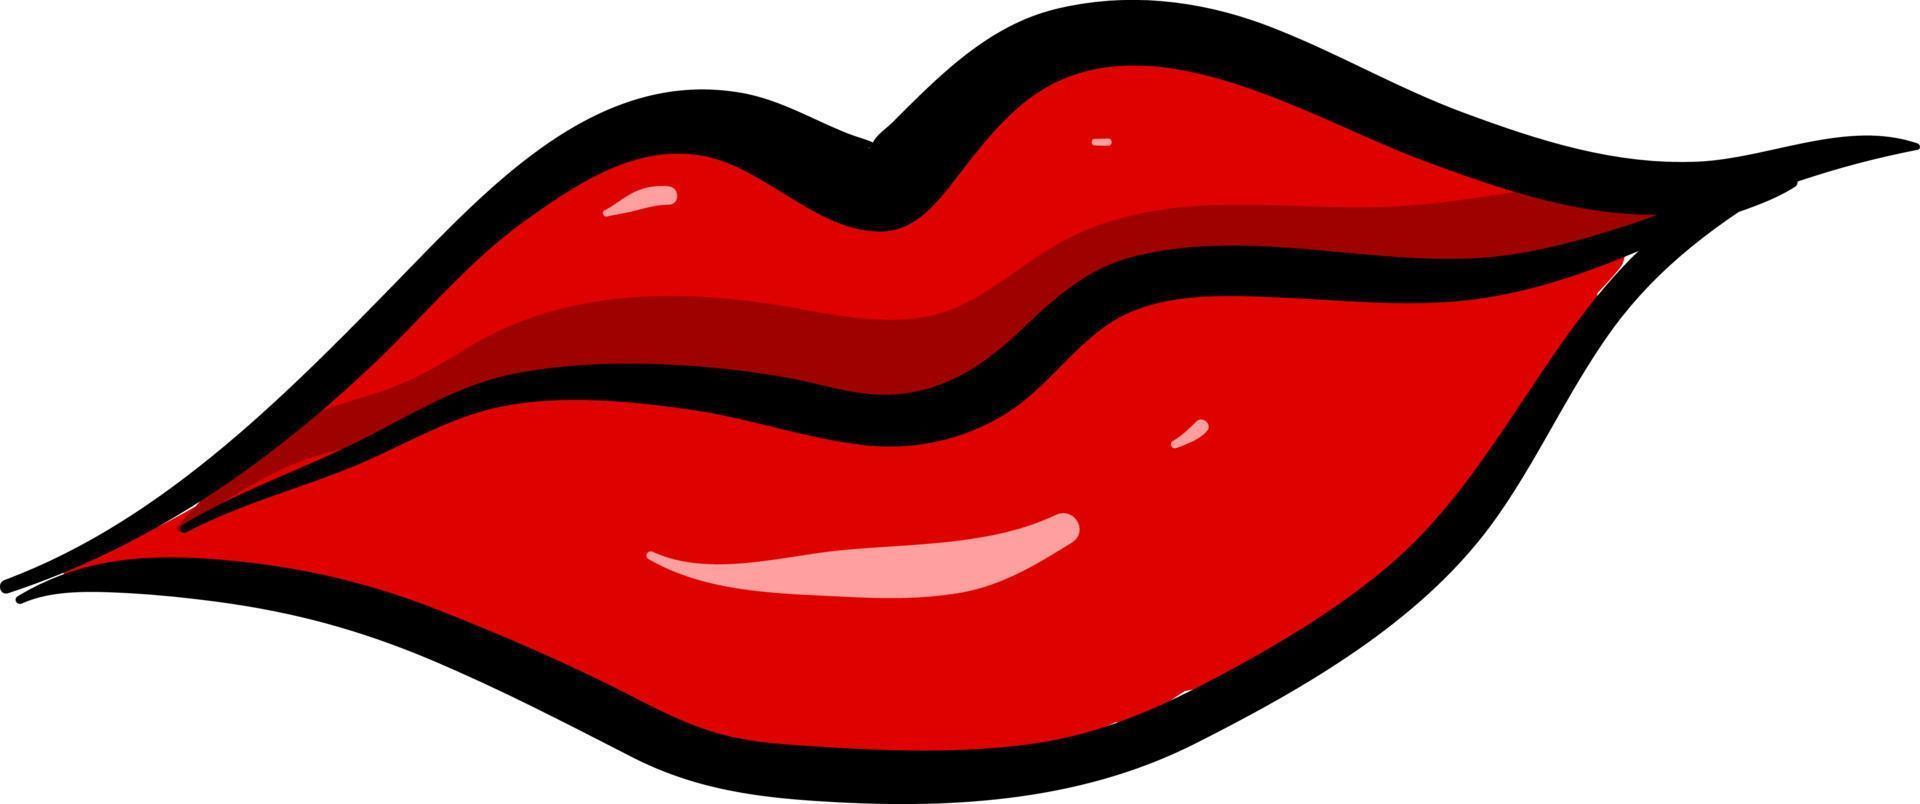 Red lips, illustration, vector on white background.